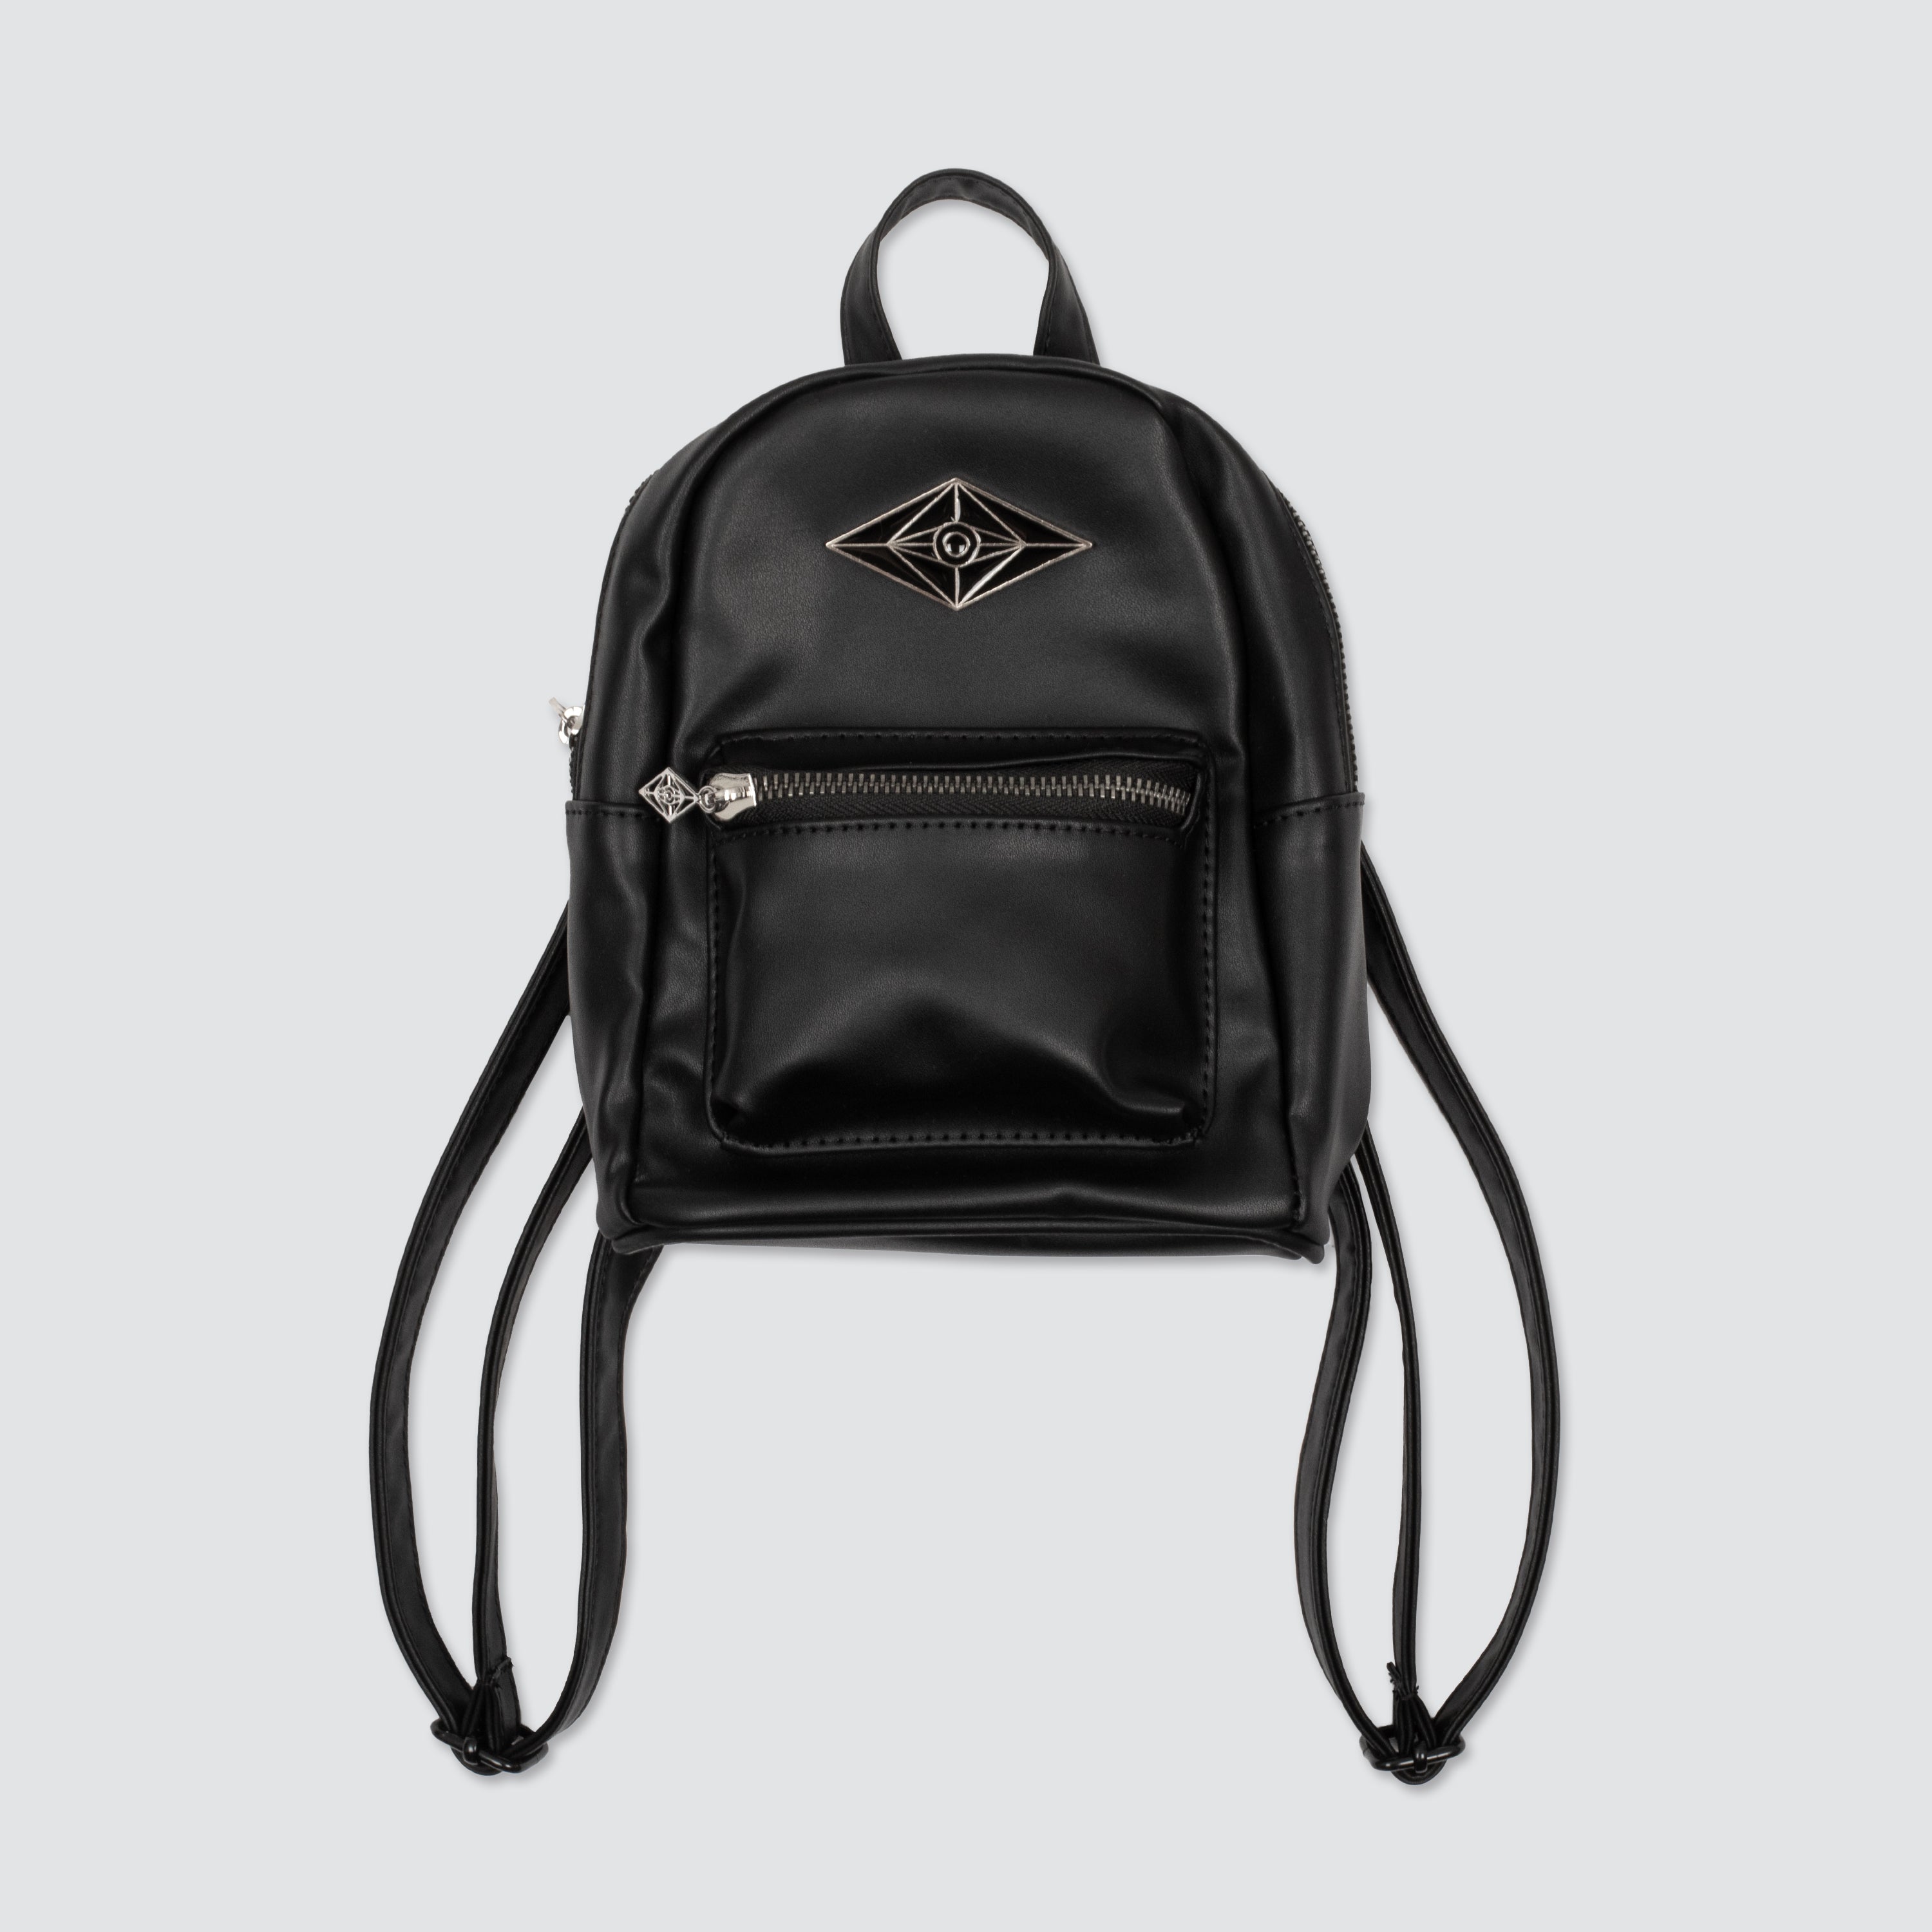 Slay queen 😍✨💰 • Louis Vuitton backpack Mini